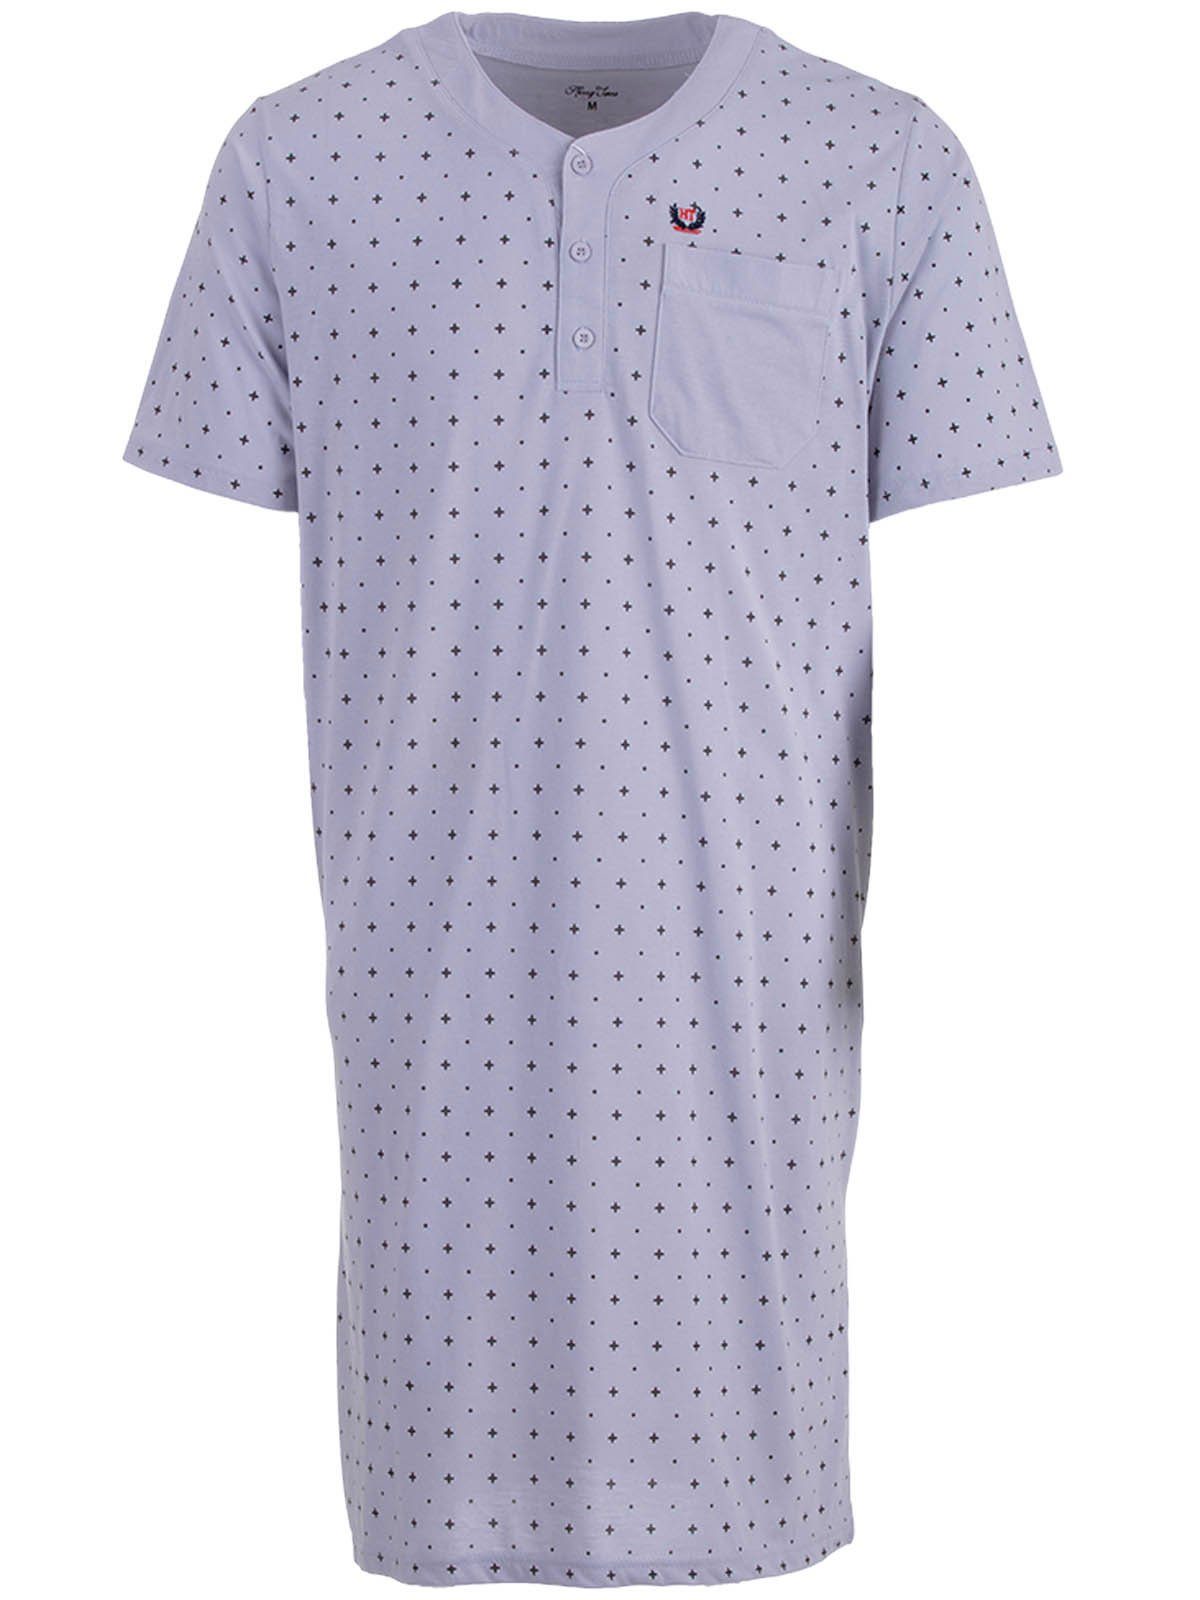 Henry Terre Nachthemd Nachthemd Kurzarm - Punkte Kreuz grau